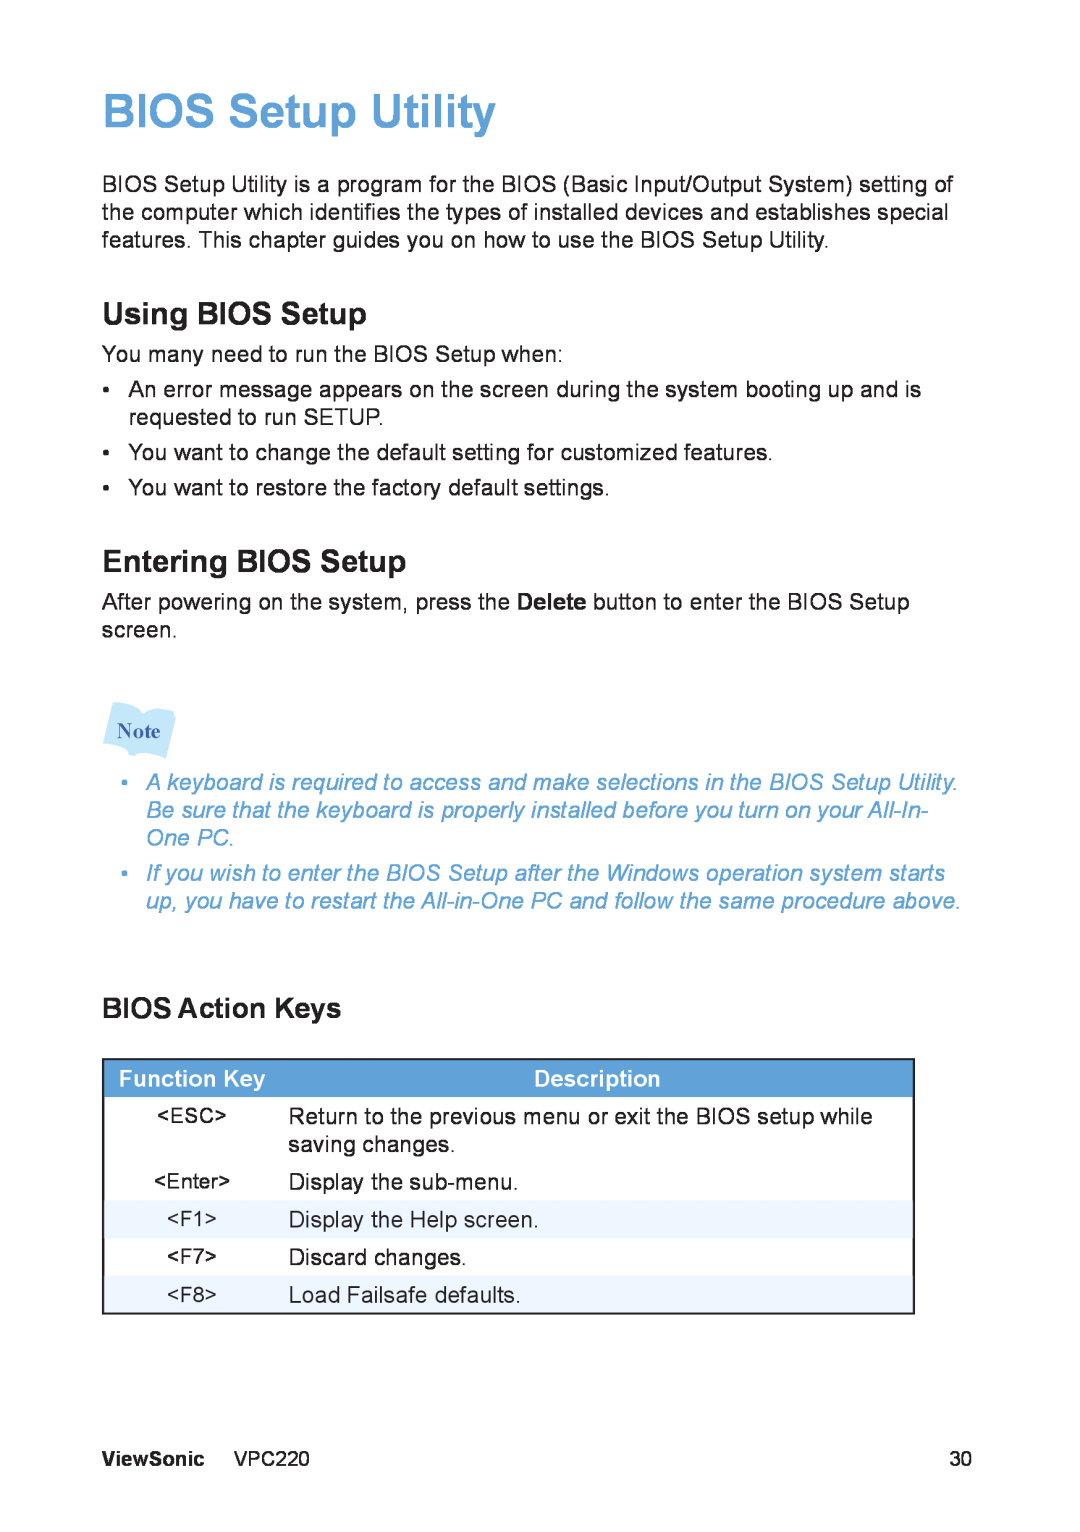 ViewSonic VS13426 BIOS Setup Utility, Using BIOS Setup, Entering BIOS Setup, BIOS Action Keys, Function Key, Description 